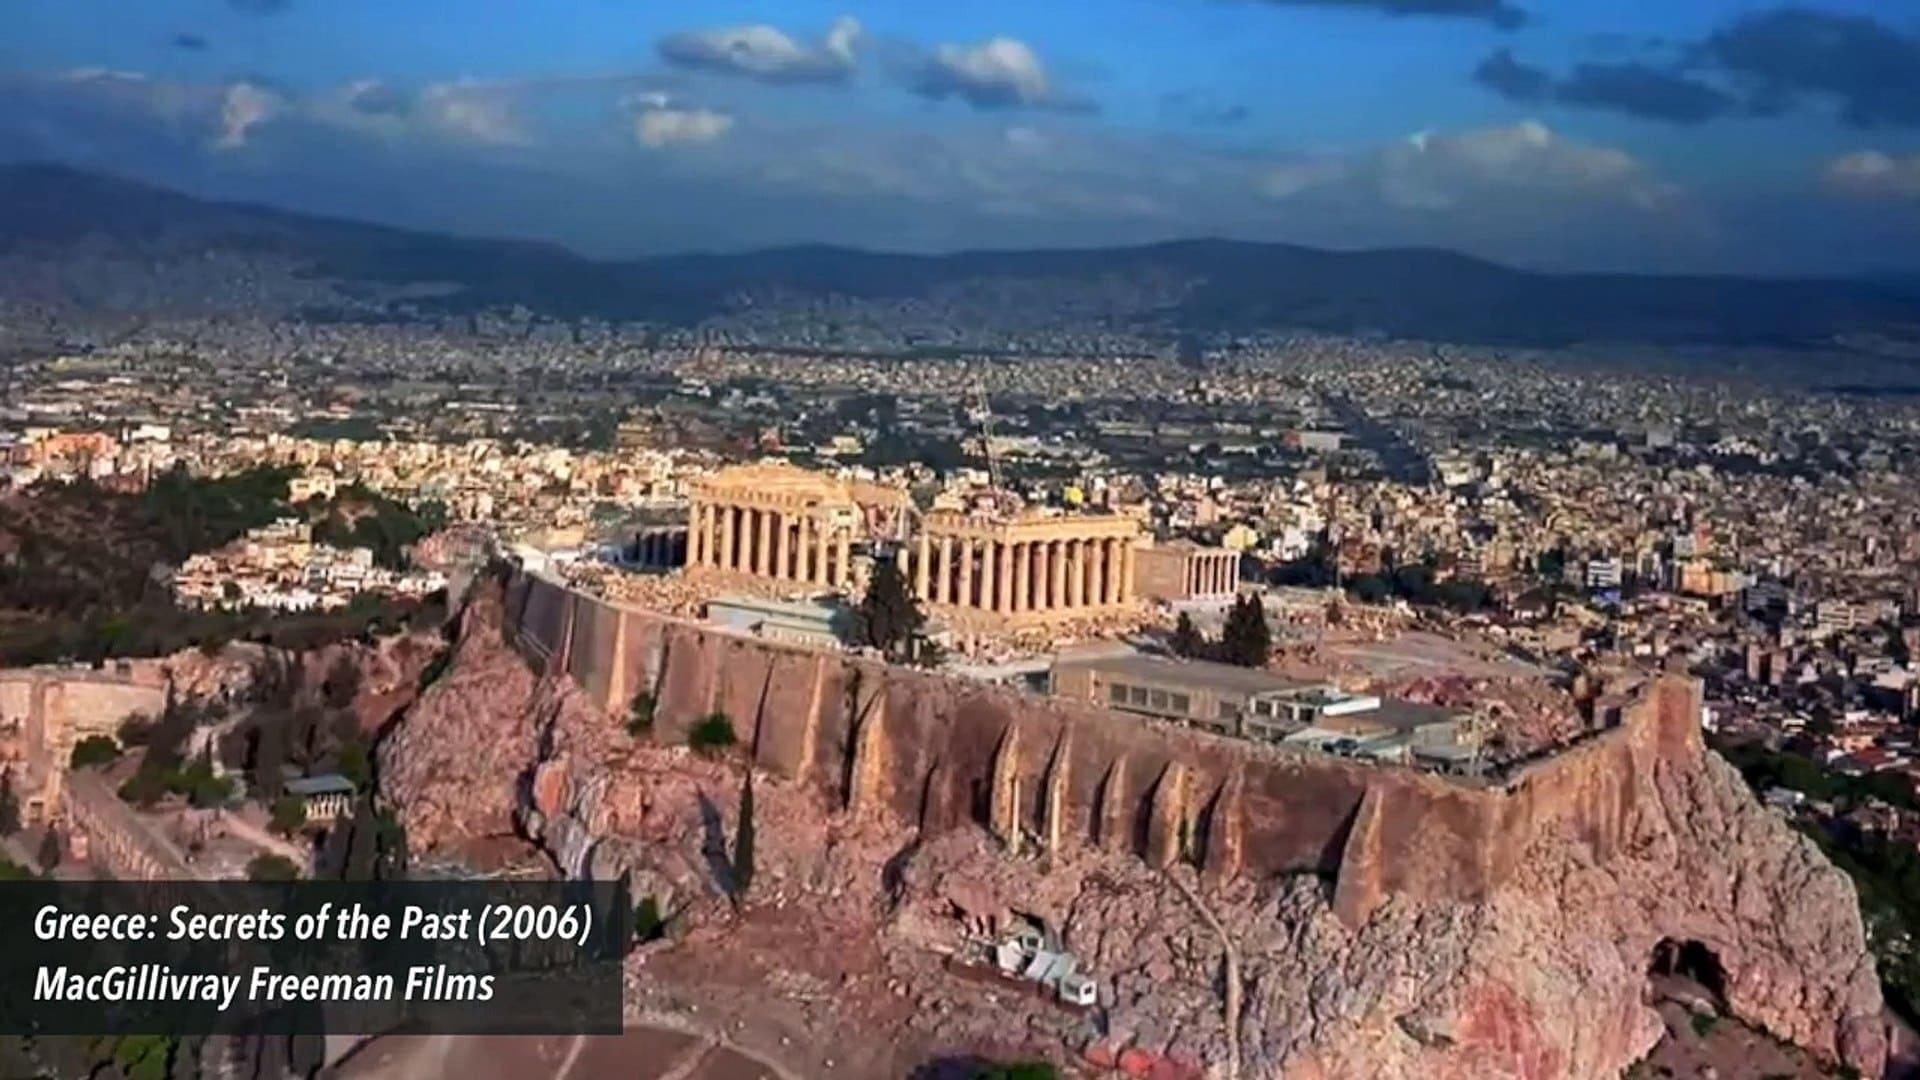 Greece: Secrets of the Past backdrop